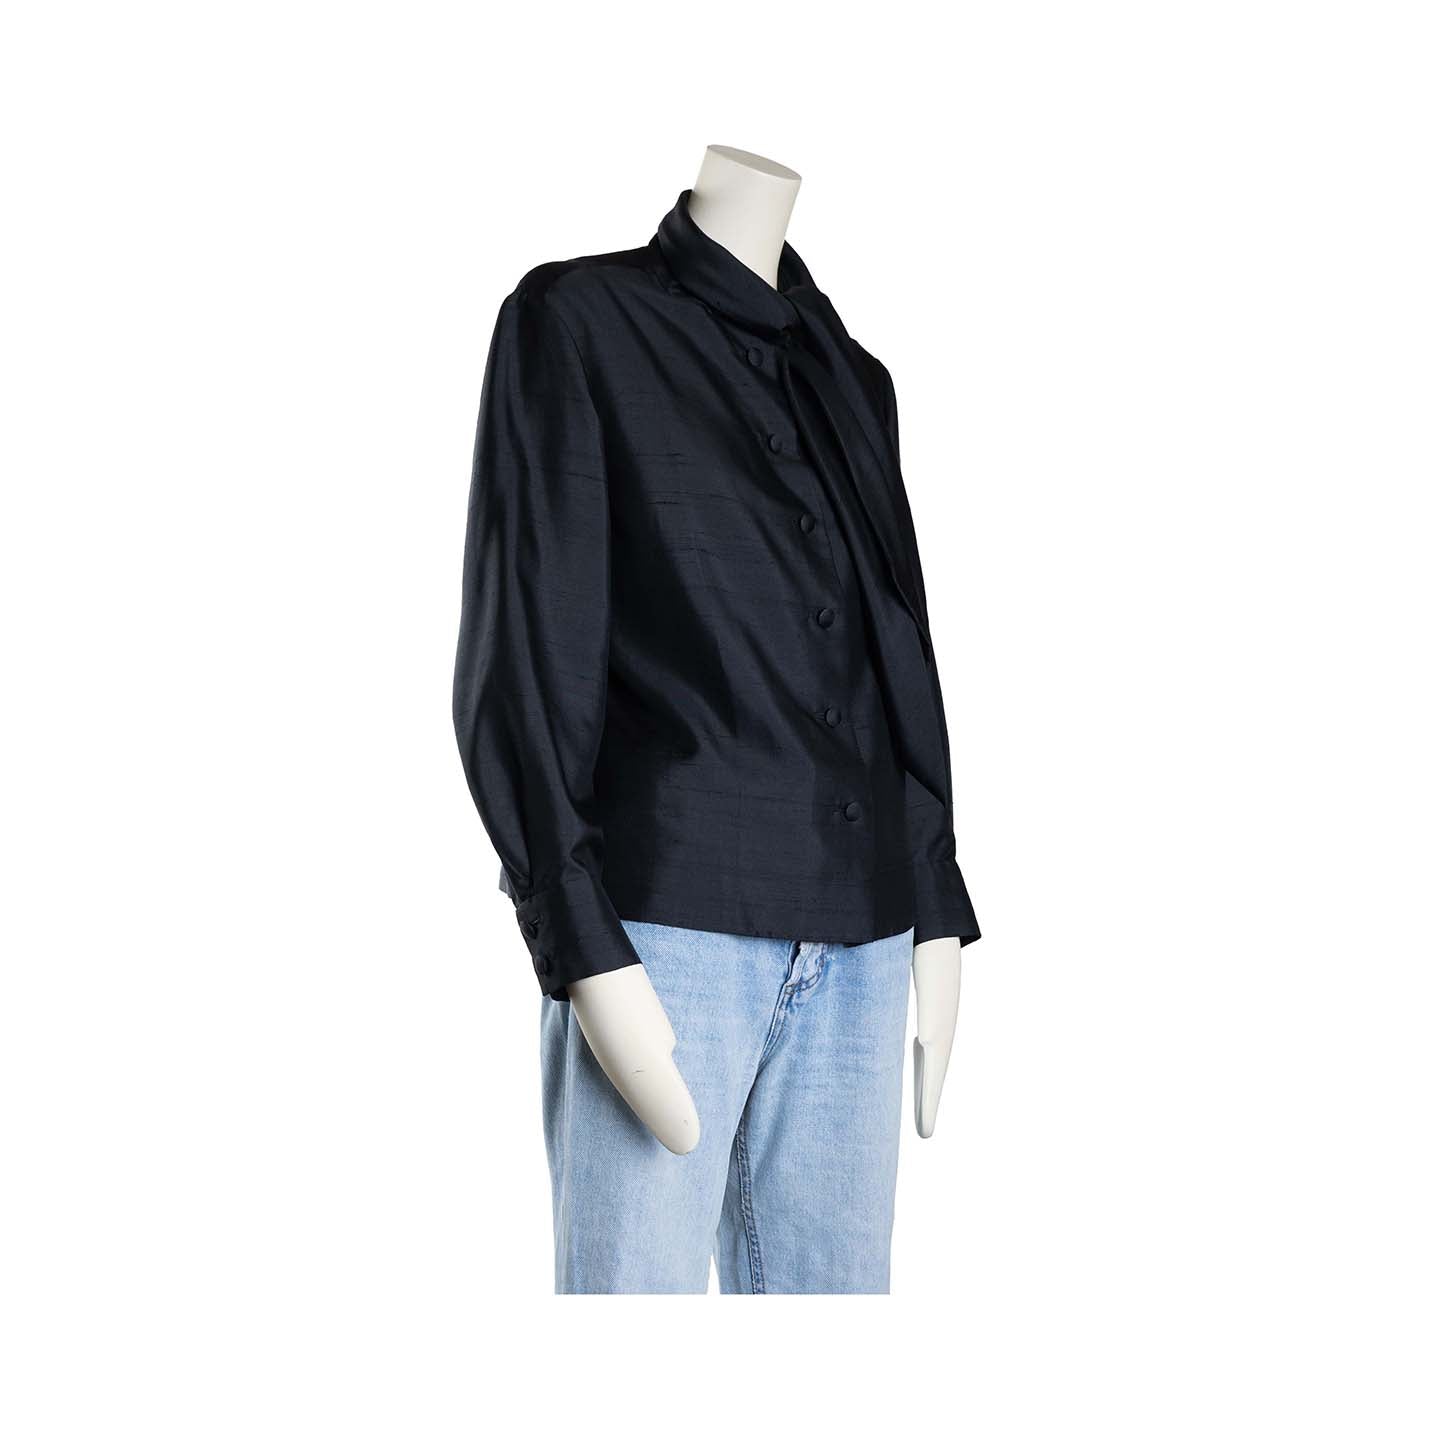 Lysis vintage Christian Dior dressmaker's shirt in black wild silk - L - 1960s